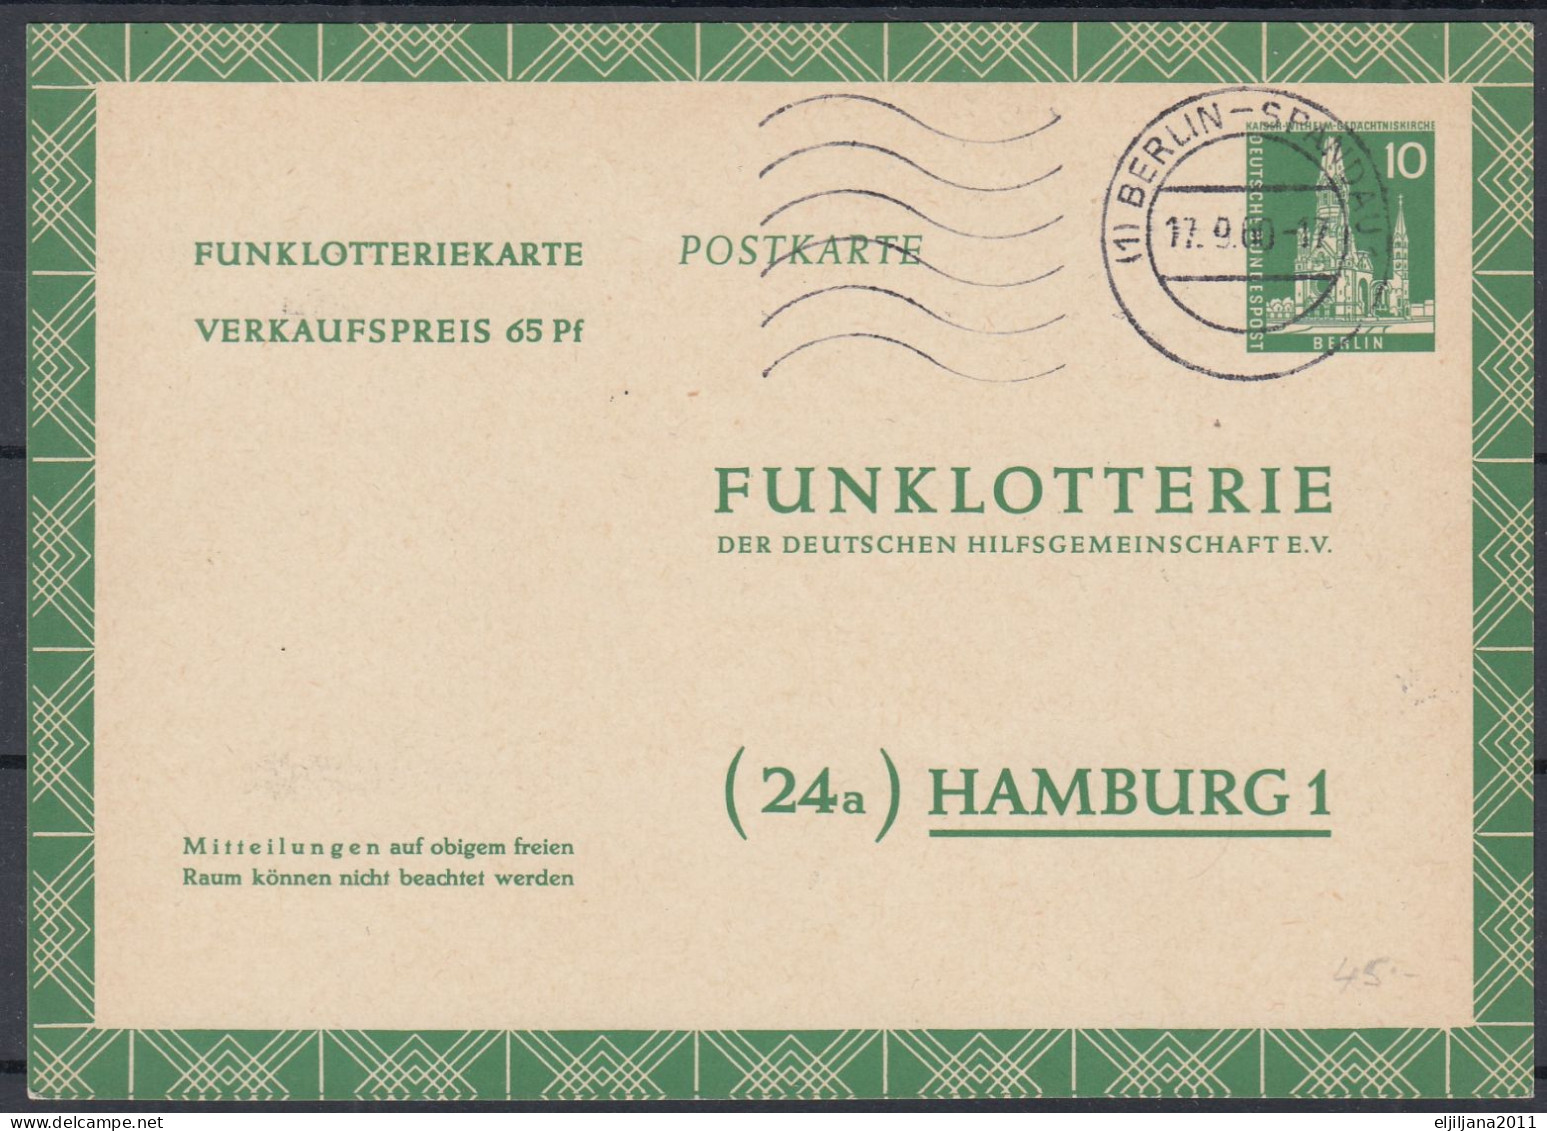 ⁕ Germany 1960 Deutsche BundesPost ⁕ FUNKLOTTERIE (24a) Hamburg 1 ⁕ Berlin-Spandau Postmark ⁕ Stationery Postcard - Cartes Postales - Oblitérées